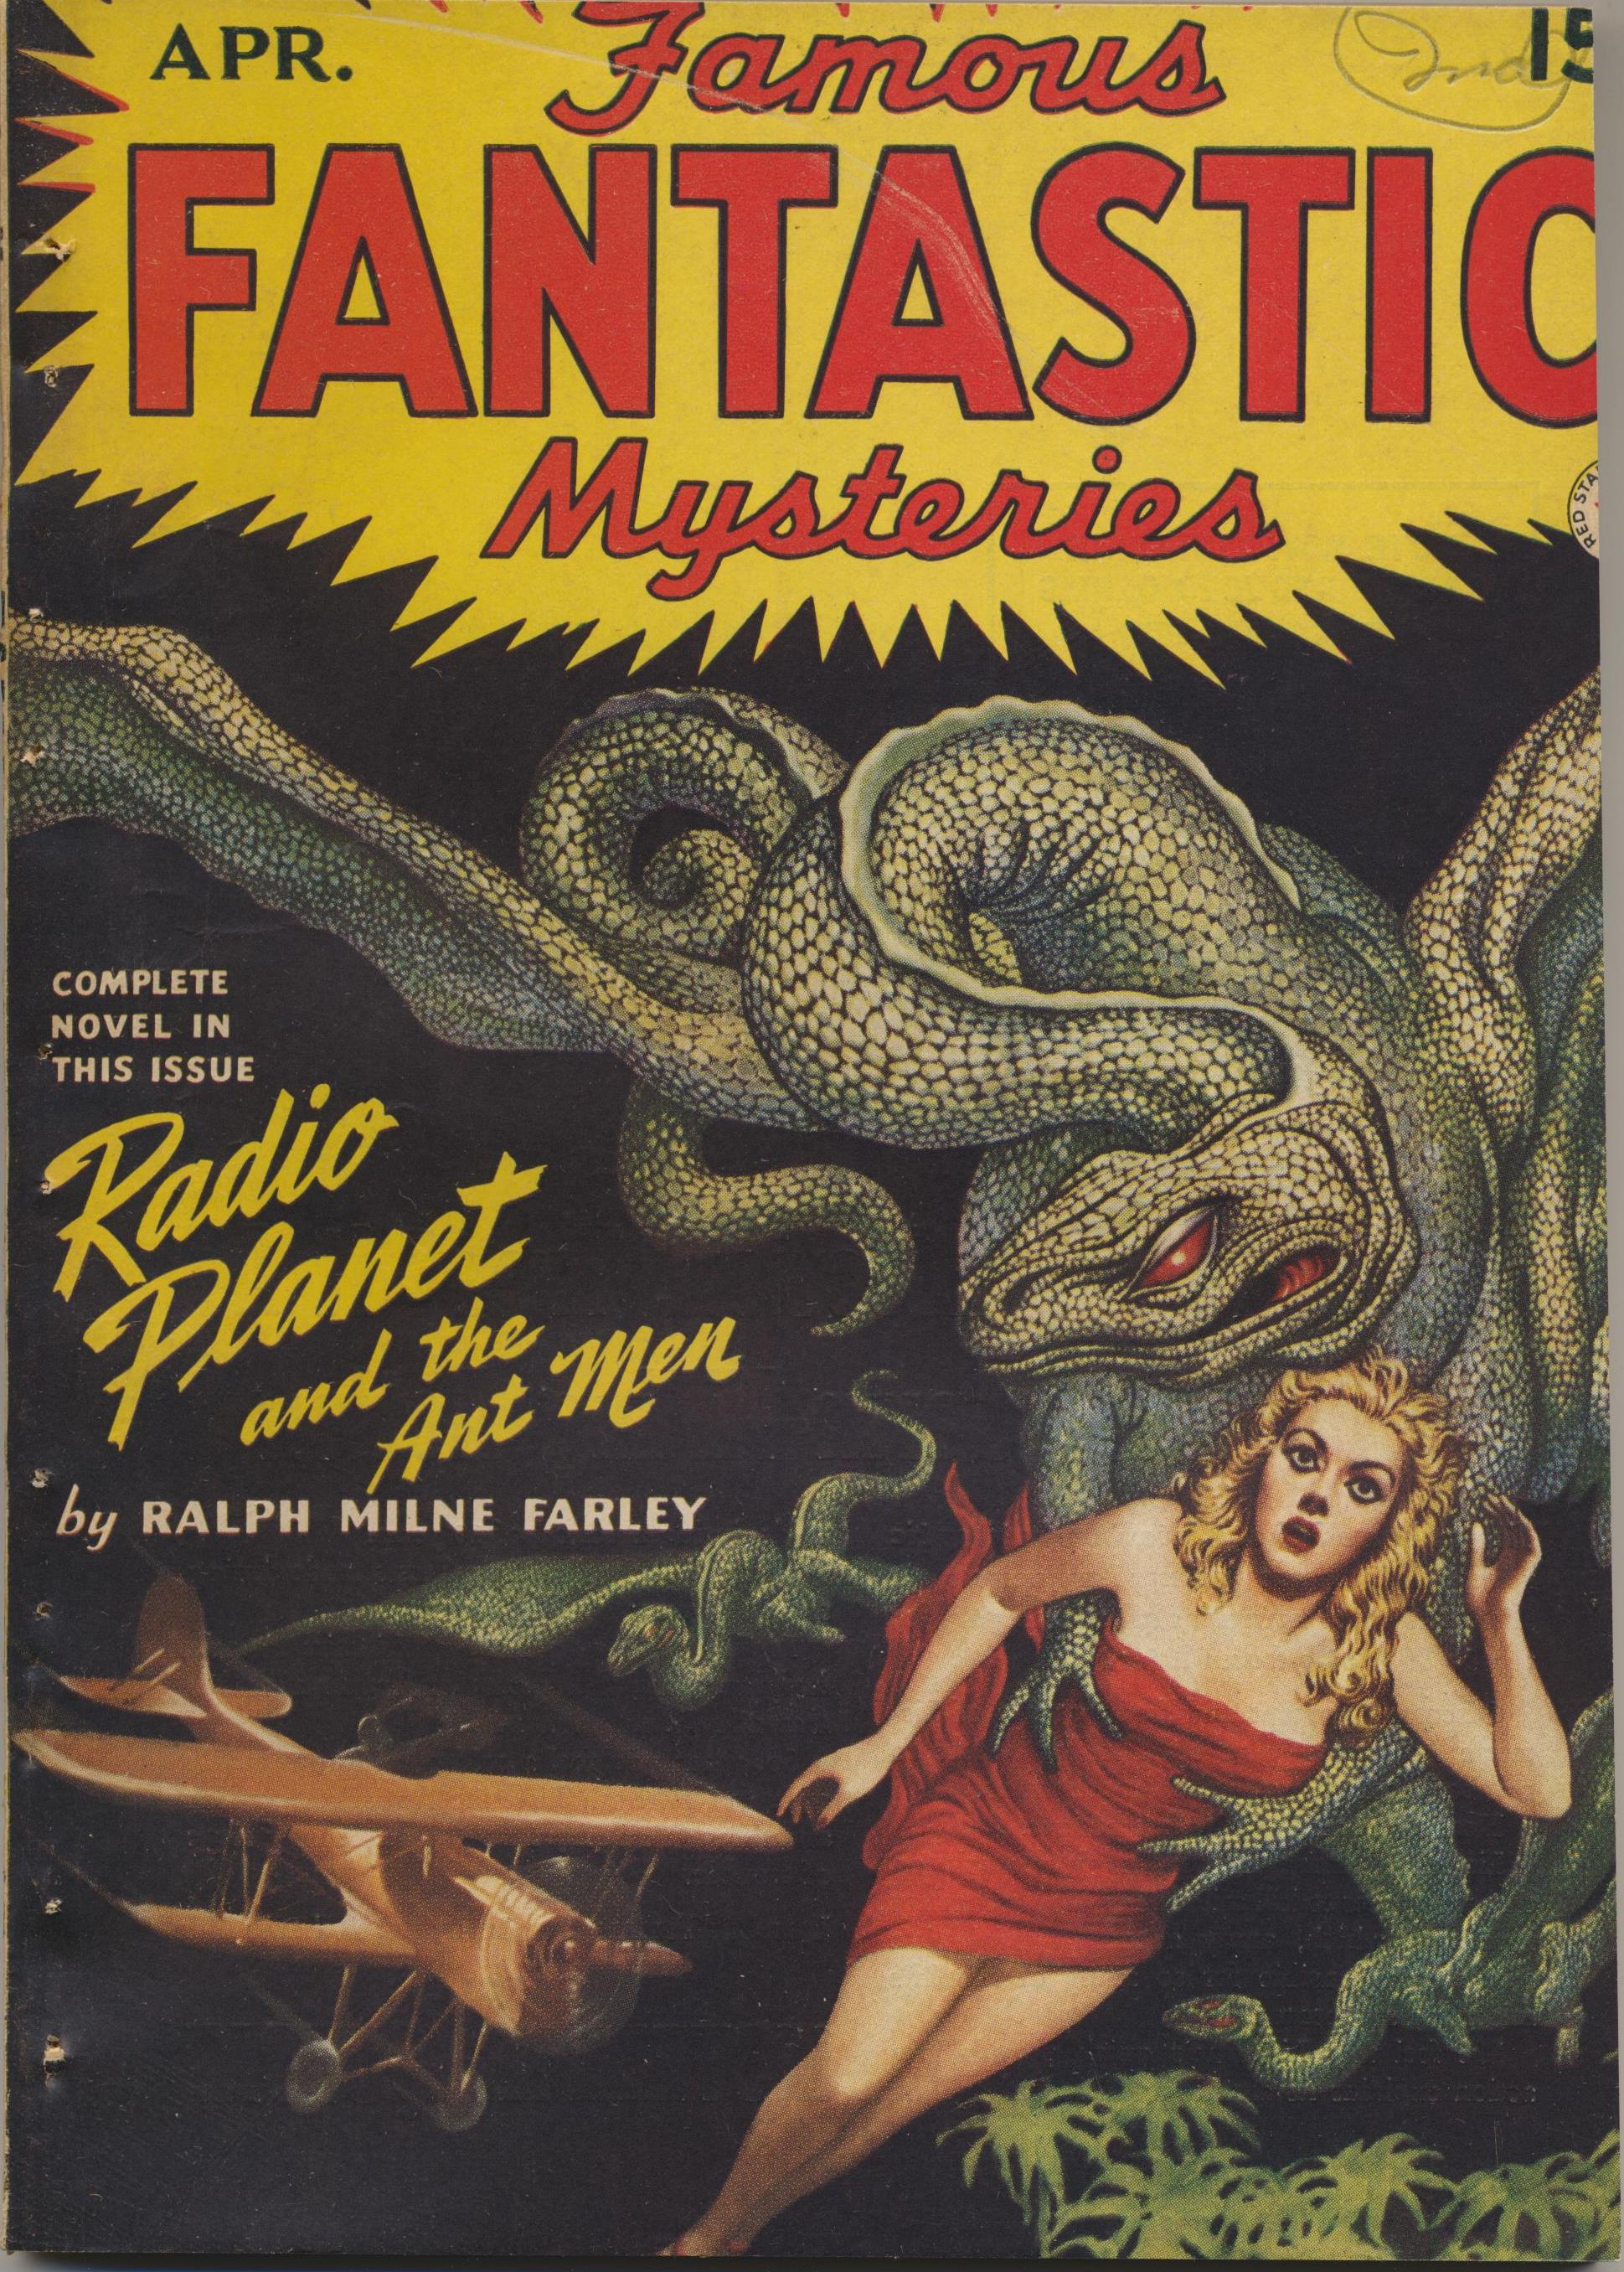 Famous Fantastic Mysteries #17